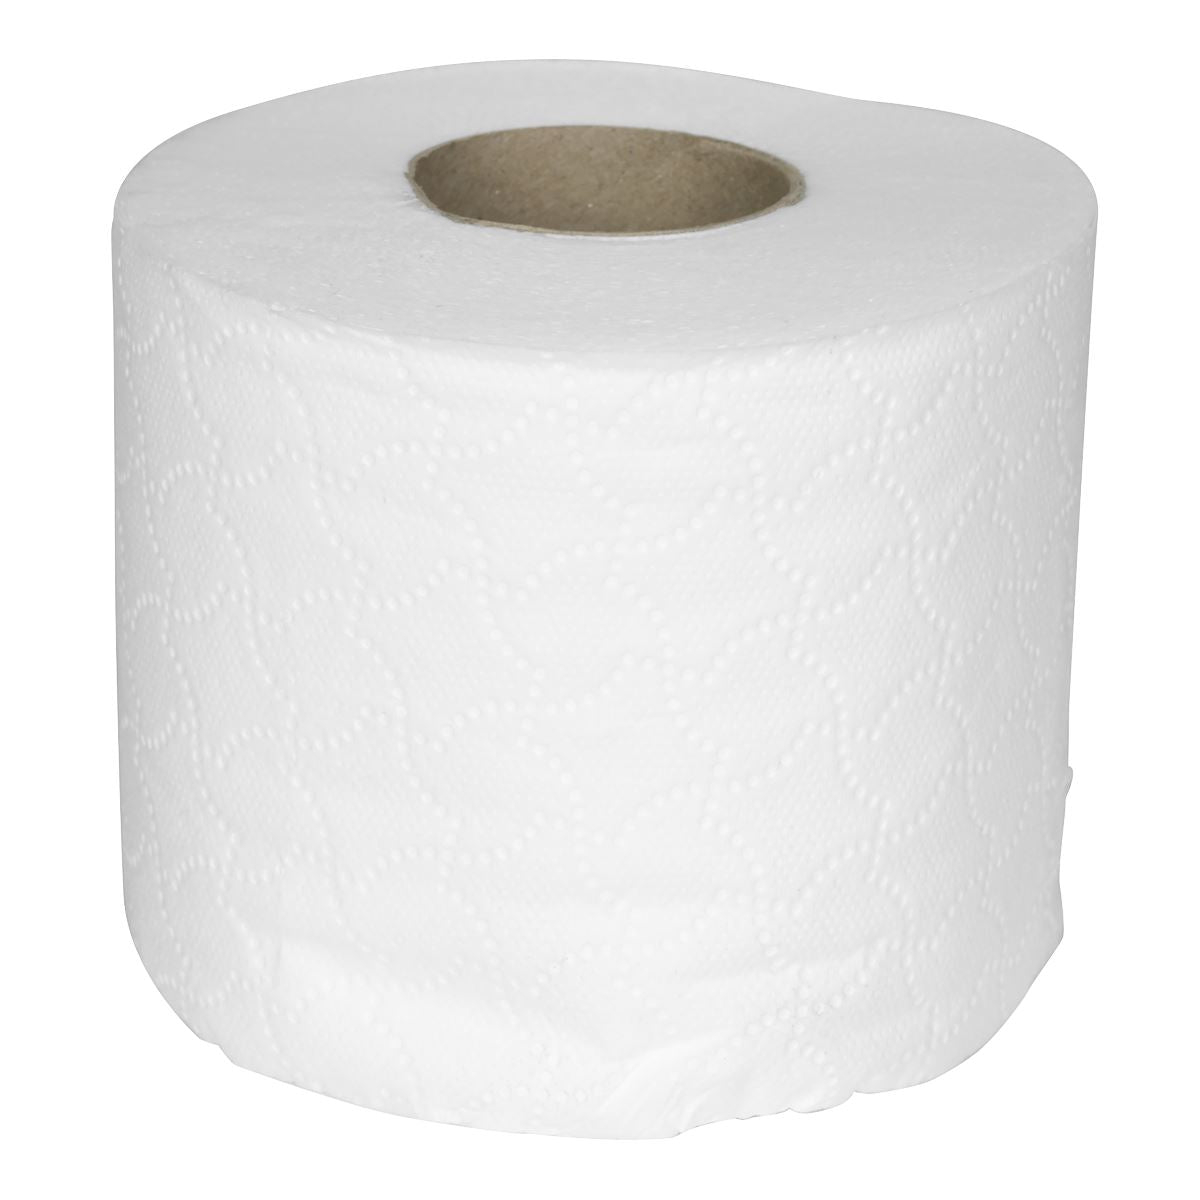 Sealey Plain White Toilet Roll - Pack of 4 x 10 (40 Rolls)